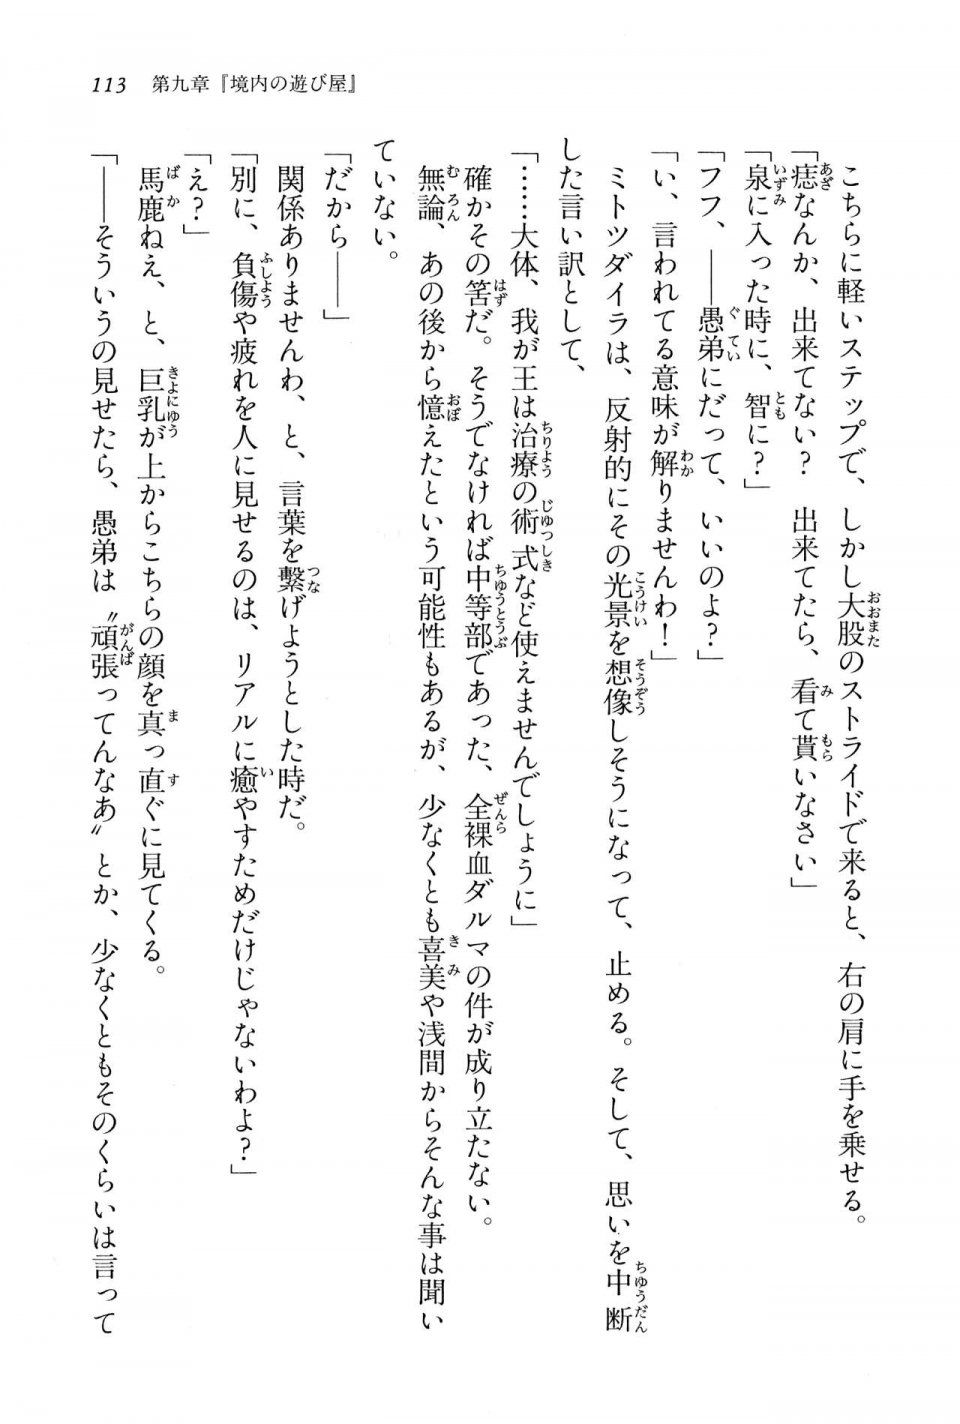 Kyoukai Senjou no Horizon BD Special Mininovel Vol 6(3B) - Photo #117